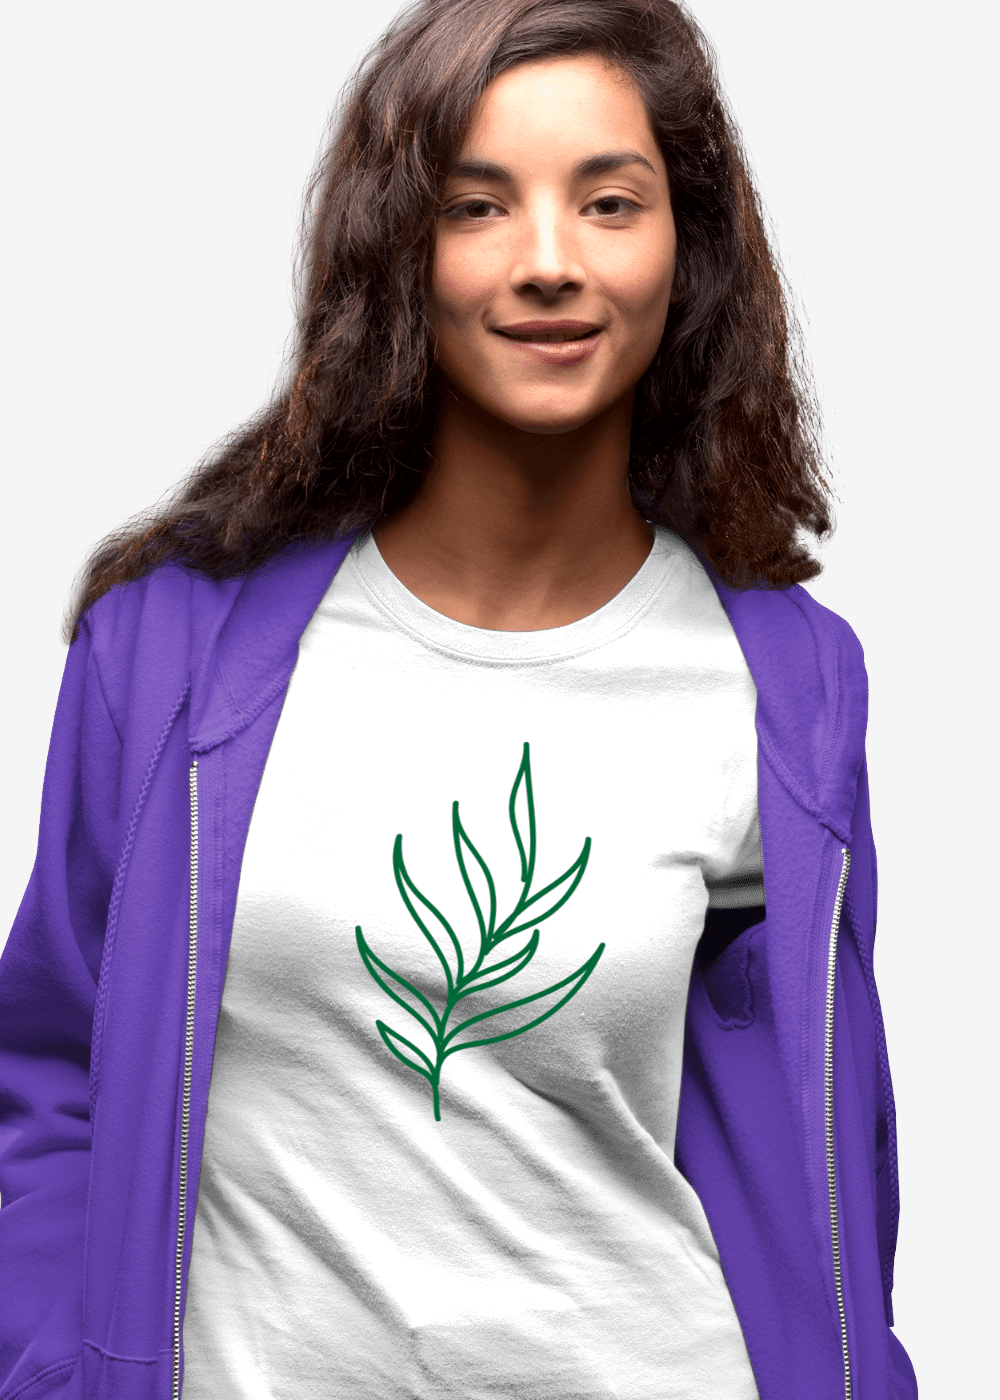 Green Plant Women's T-shirt